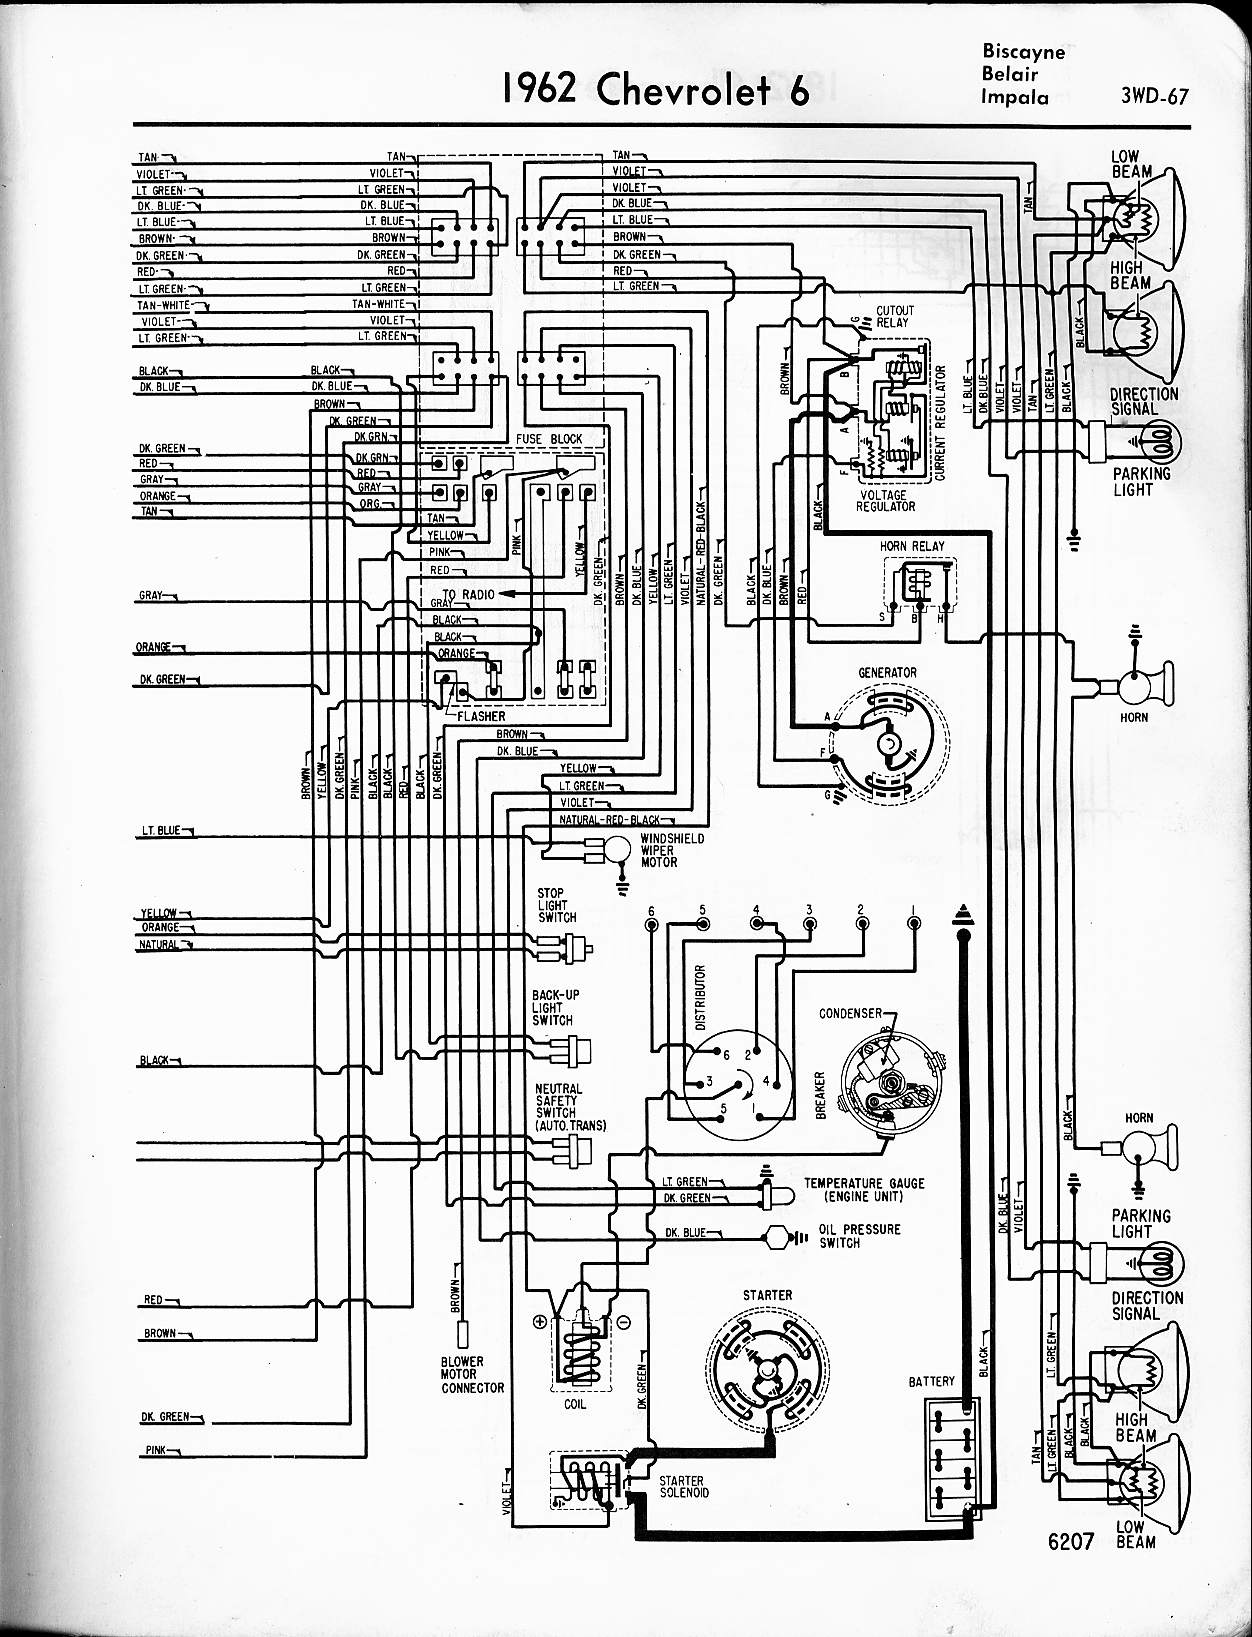 [DIAGRAM] 1969 Chevy Corvette Wiring Diagram FULL Version HD Quality